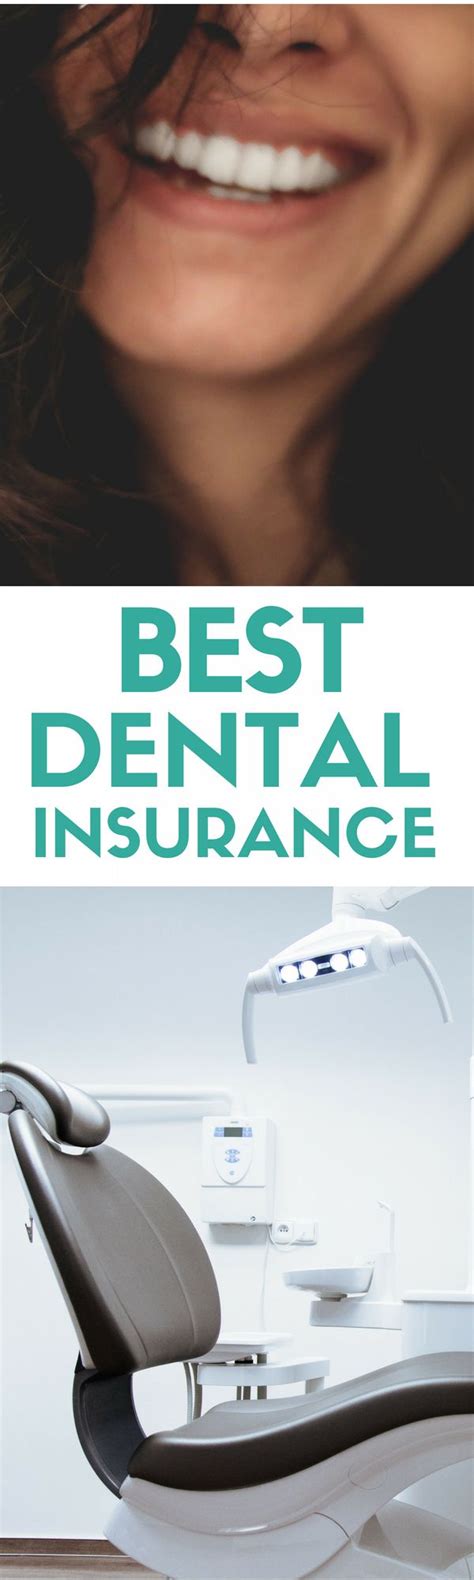 affordable dental insurance companies